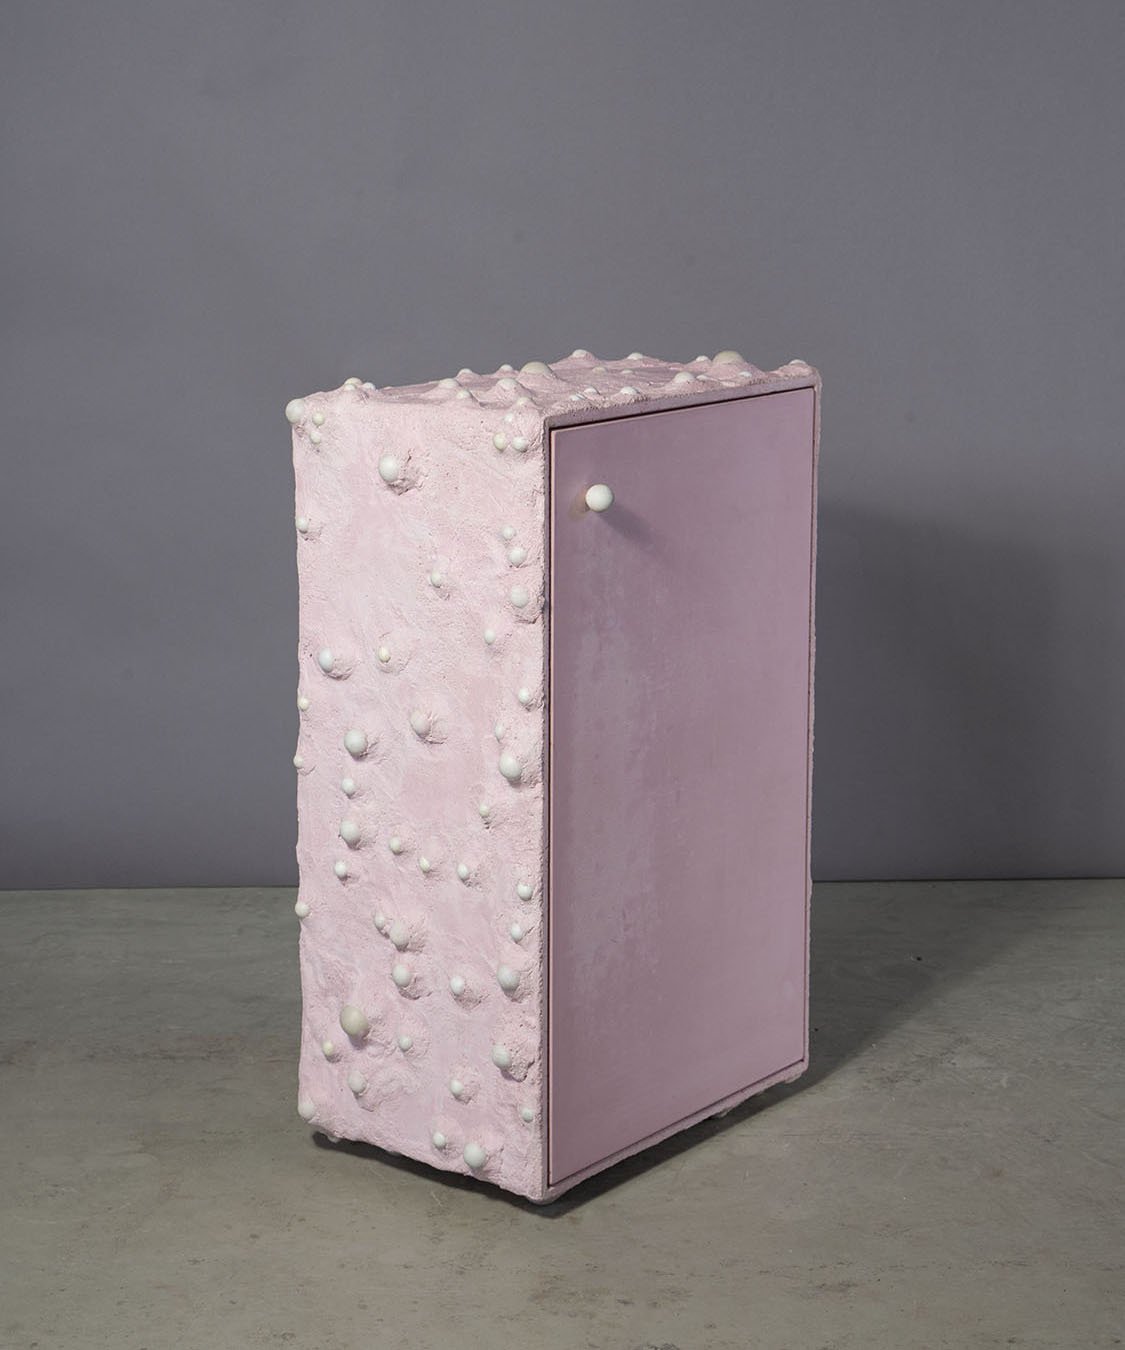 NEW: STELLAR LOVE - concrete cabinet